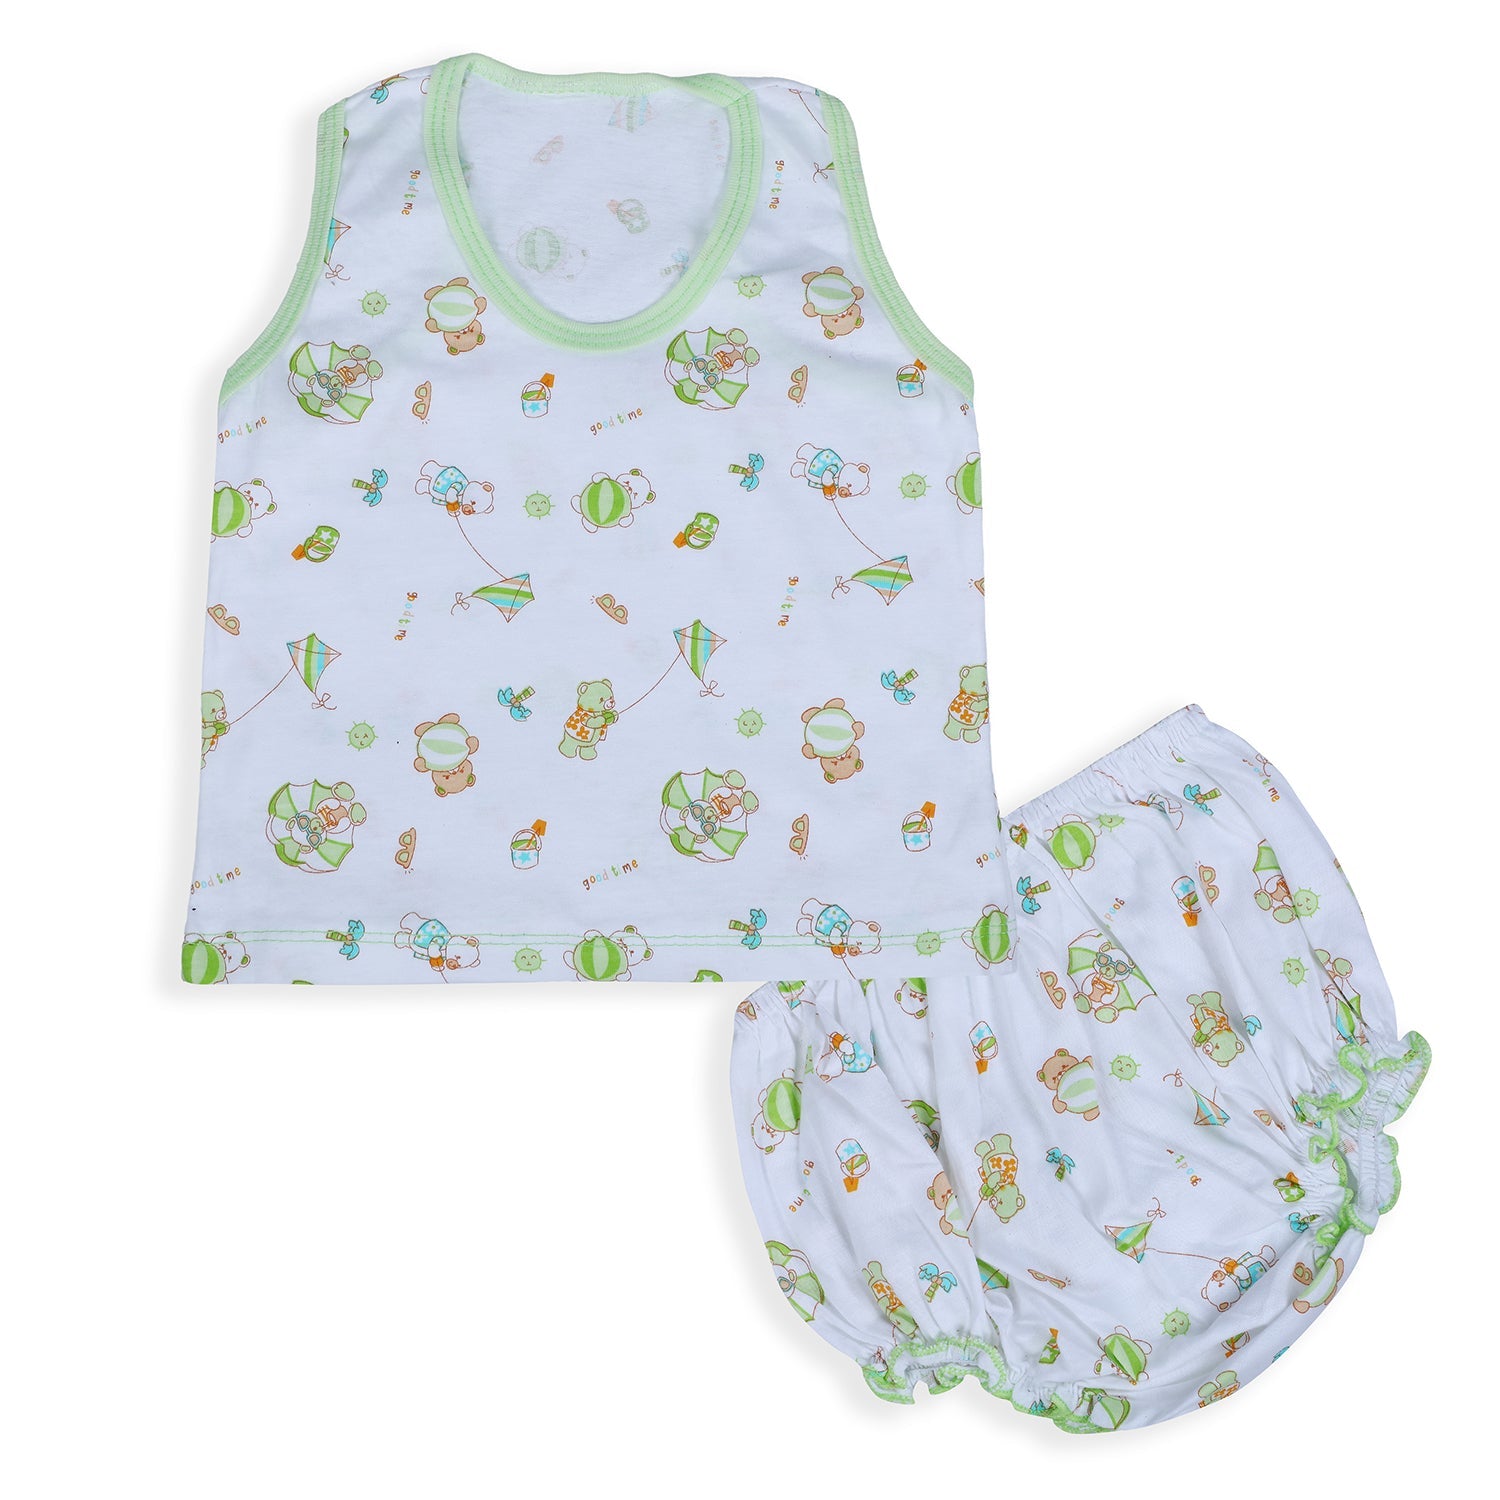 Baby Moo Kite Flying Bear Pure Cotton Sleeveless Vest With Matching Bottom 2pcs Set - Green - Baby Moo